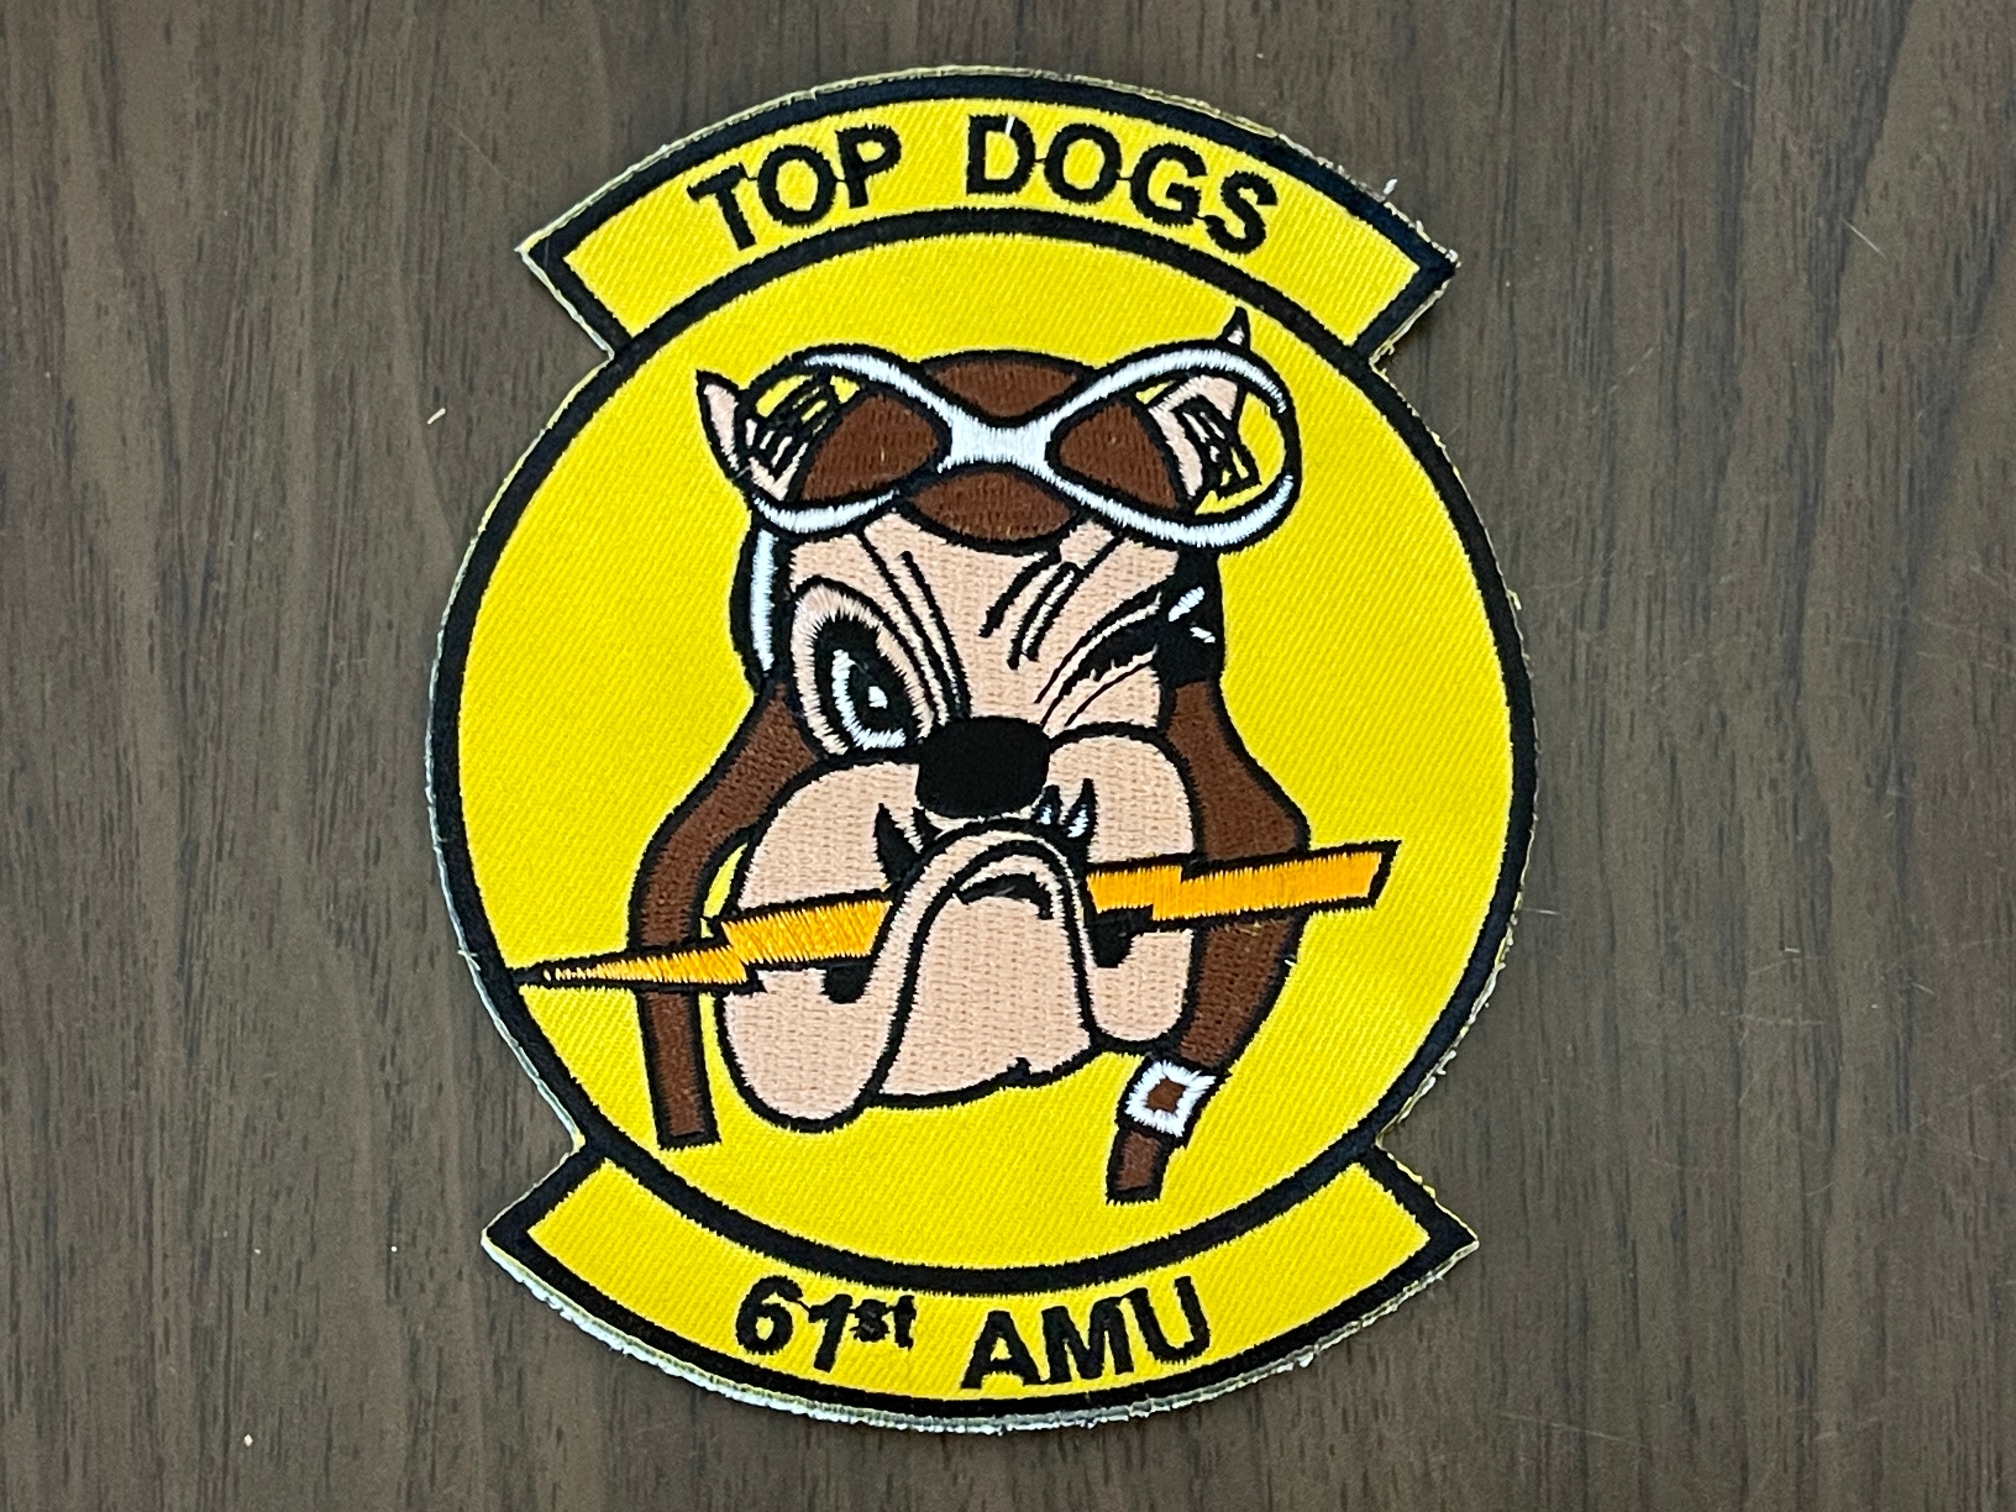 Air Force USAF 61ST AMU TOP DOGS AIRCRAFT MAINTENANCE UNIT AZ Collectible Patch!